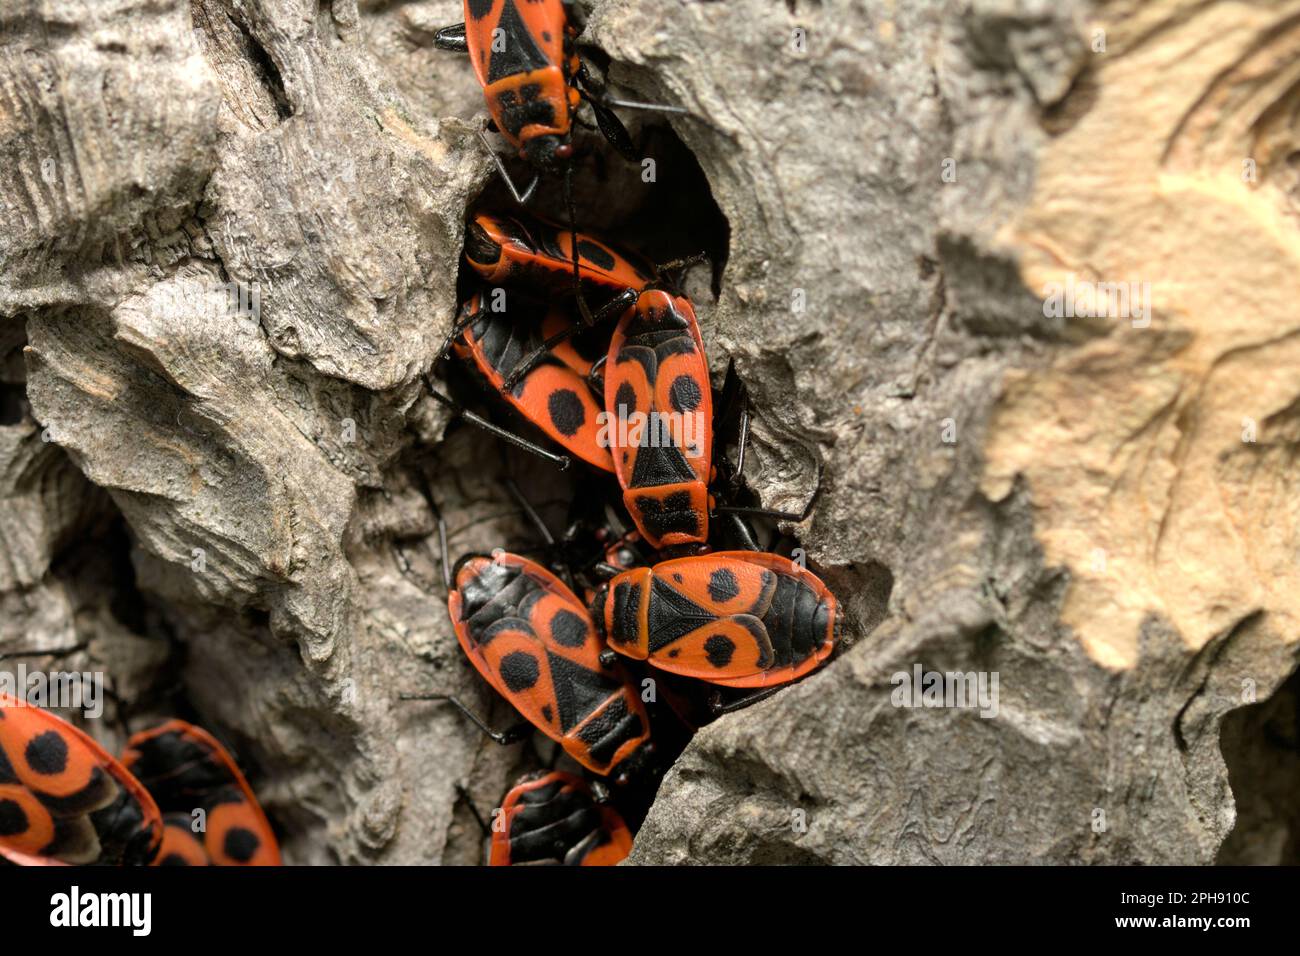 Closeup of a group of firebugs (Pyrrhocoris apterus) crawling in a tree gap, insects, bugs, wildlife, nature Stock Photo